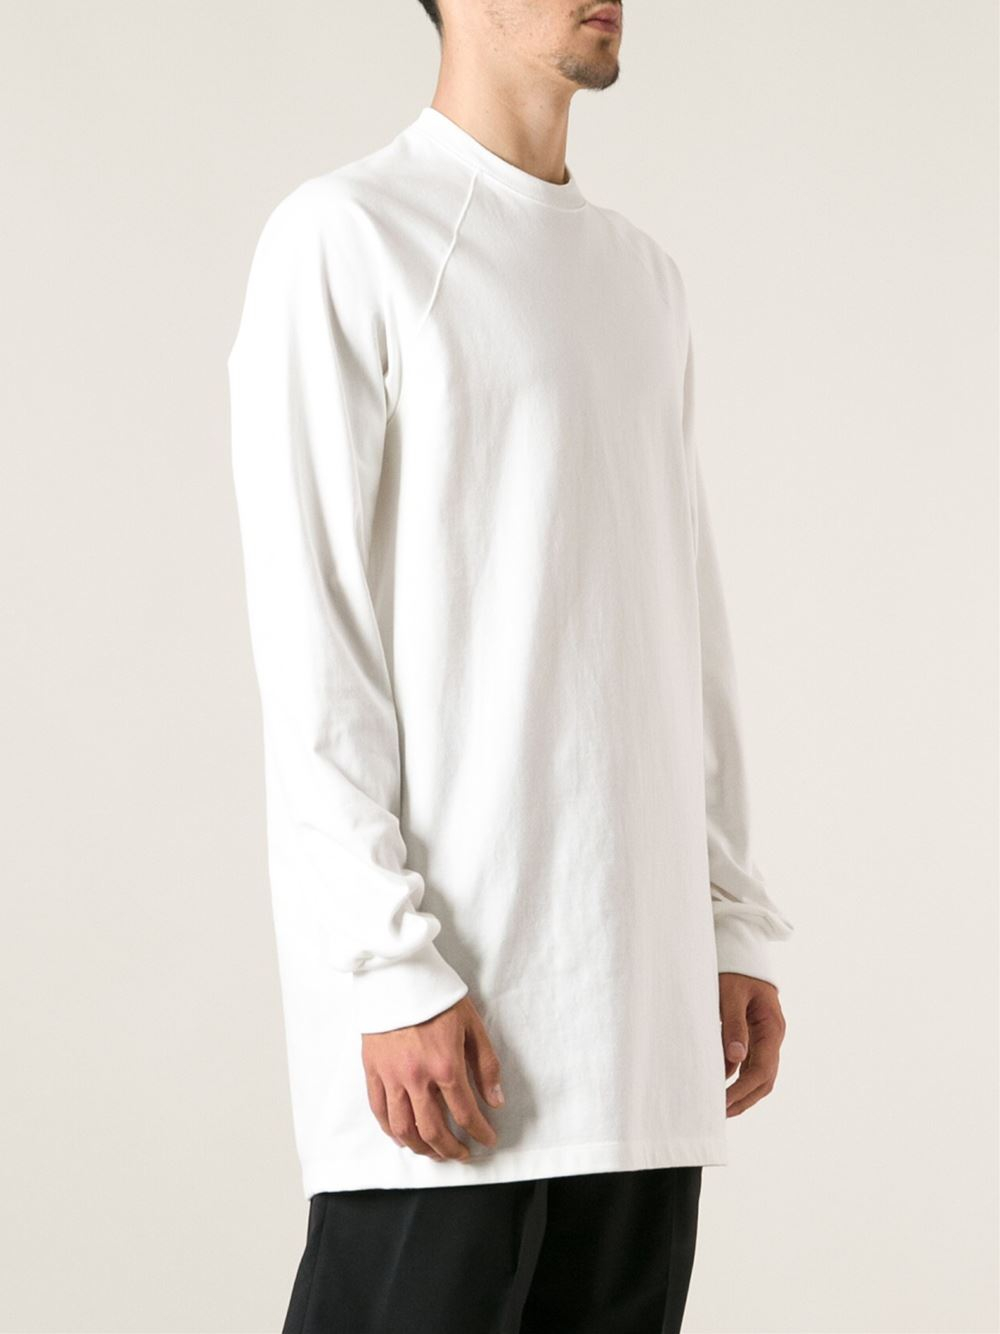 Lyst - Rick Owens Oversized Sweatshirt in White for Men